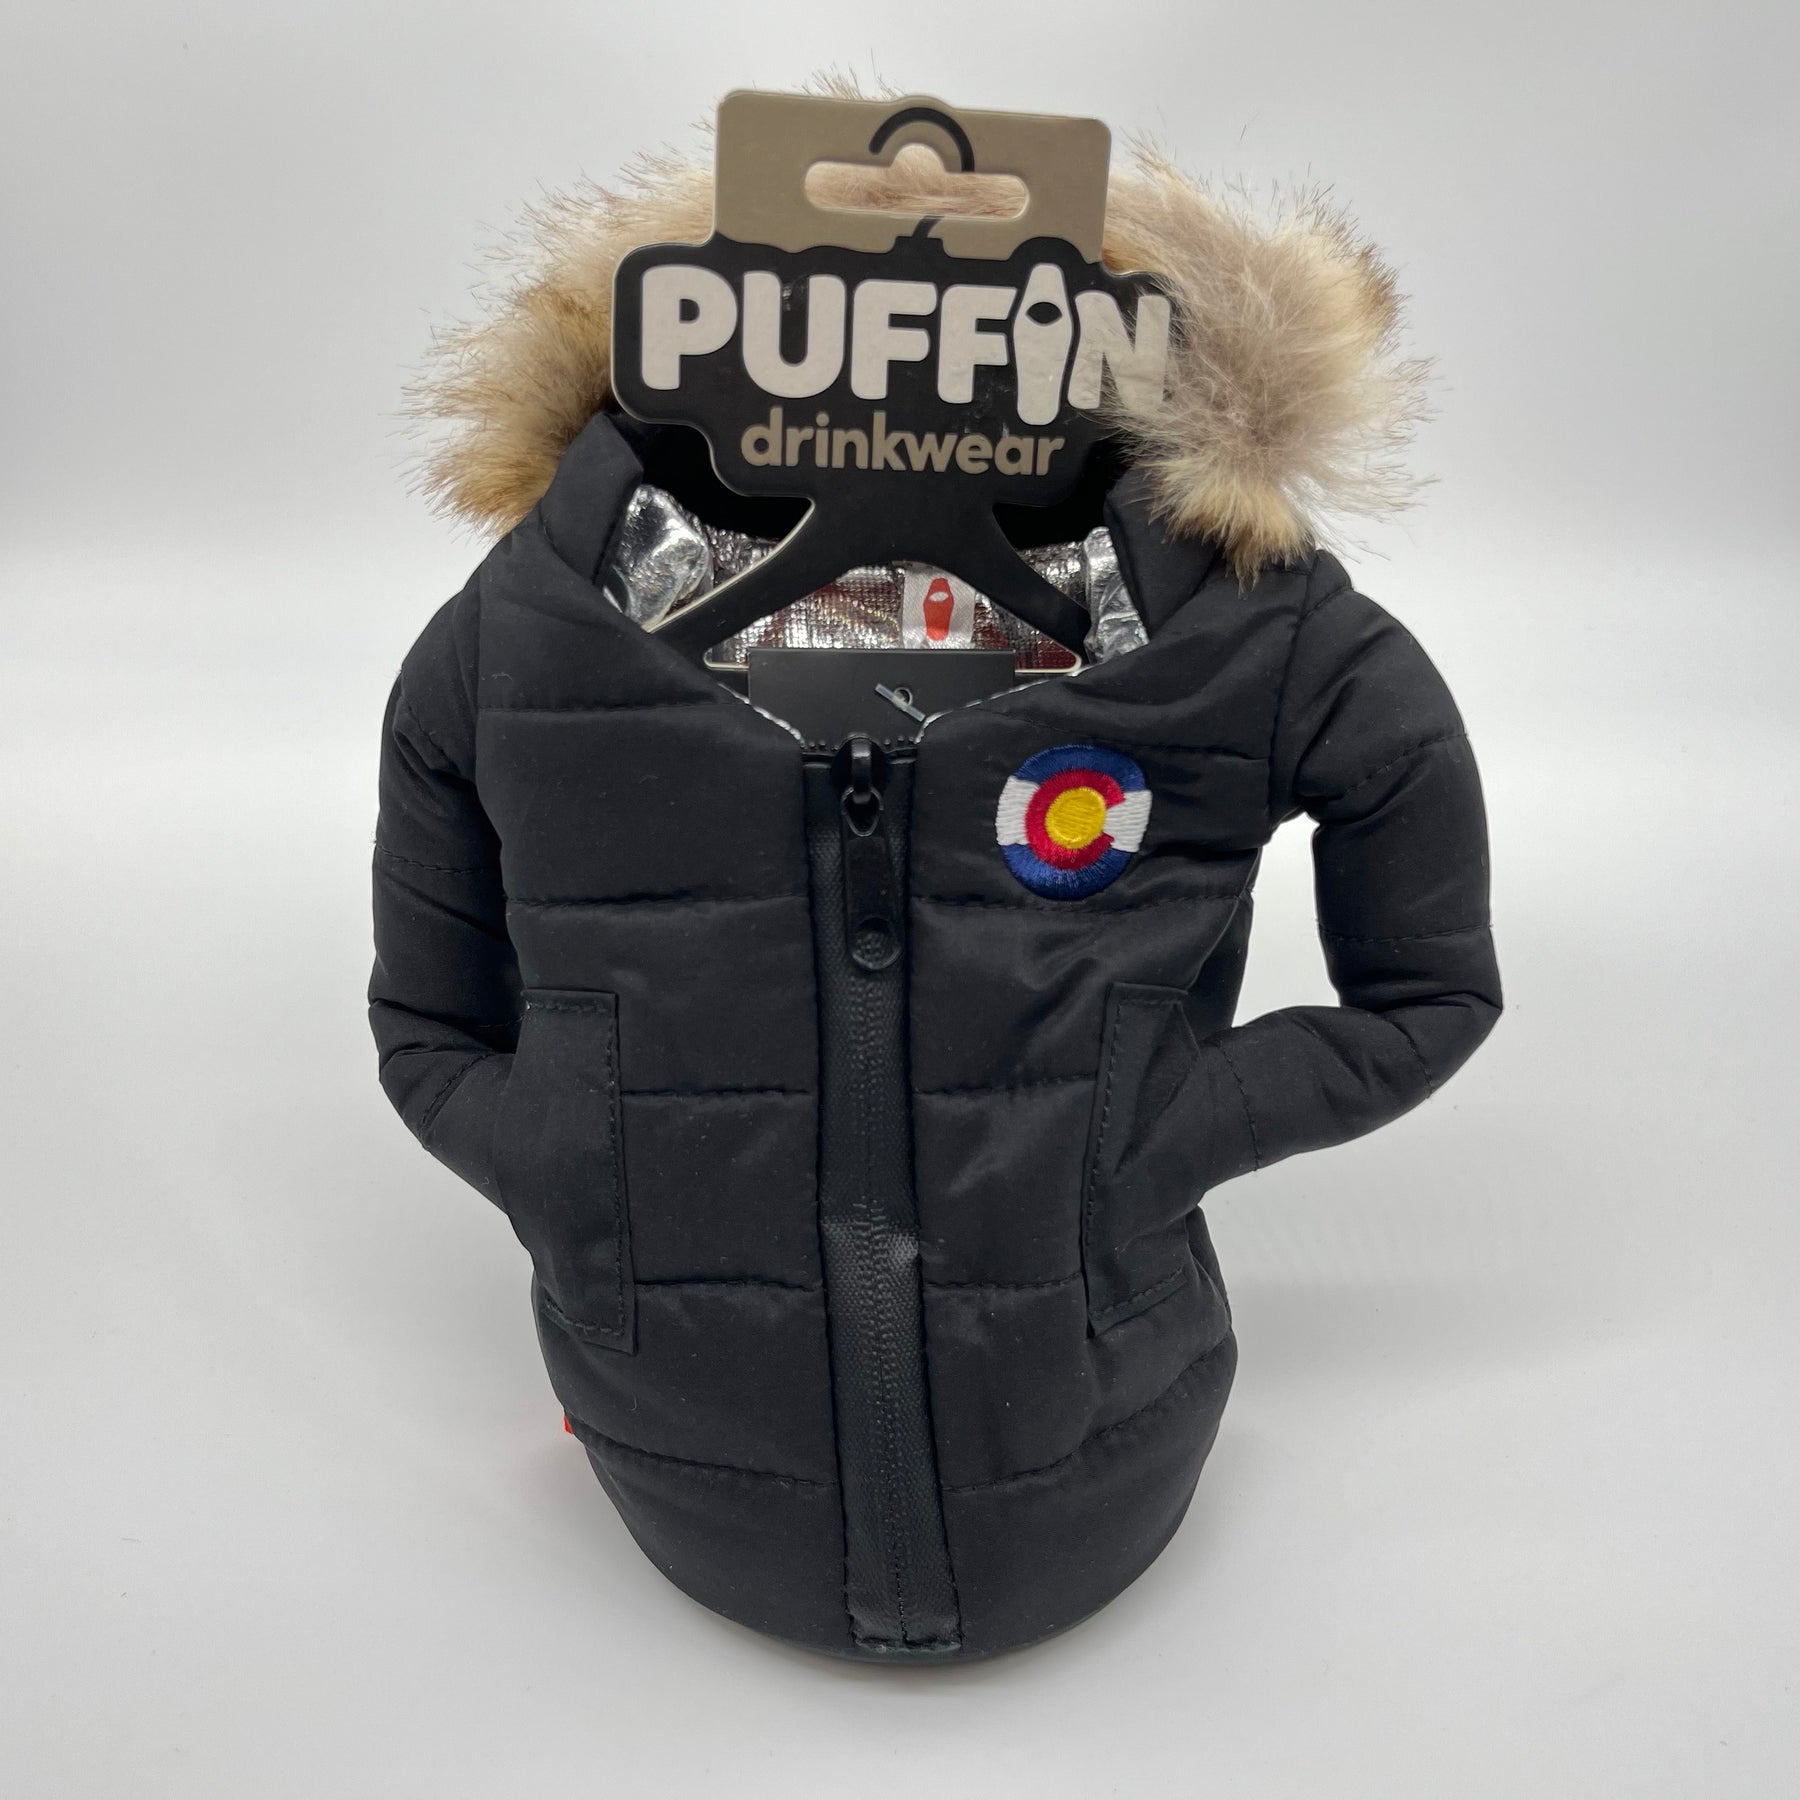 Puffin Drink Holder - Black with Fur-lined Hood w/ custom Colorado Flag Logo - 12 oz